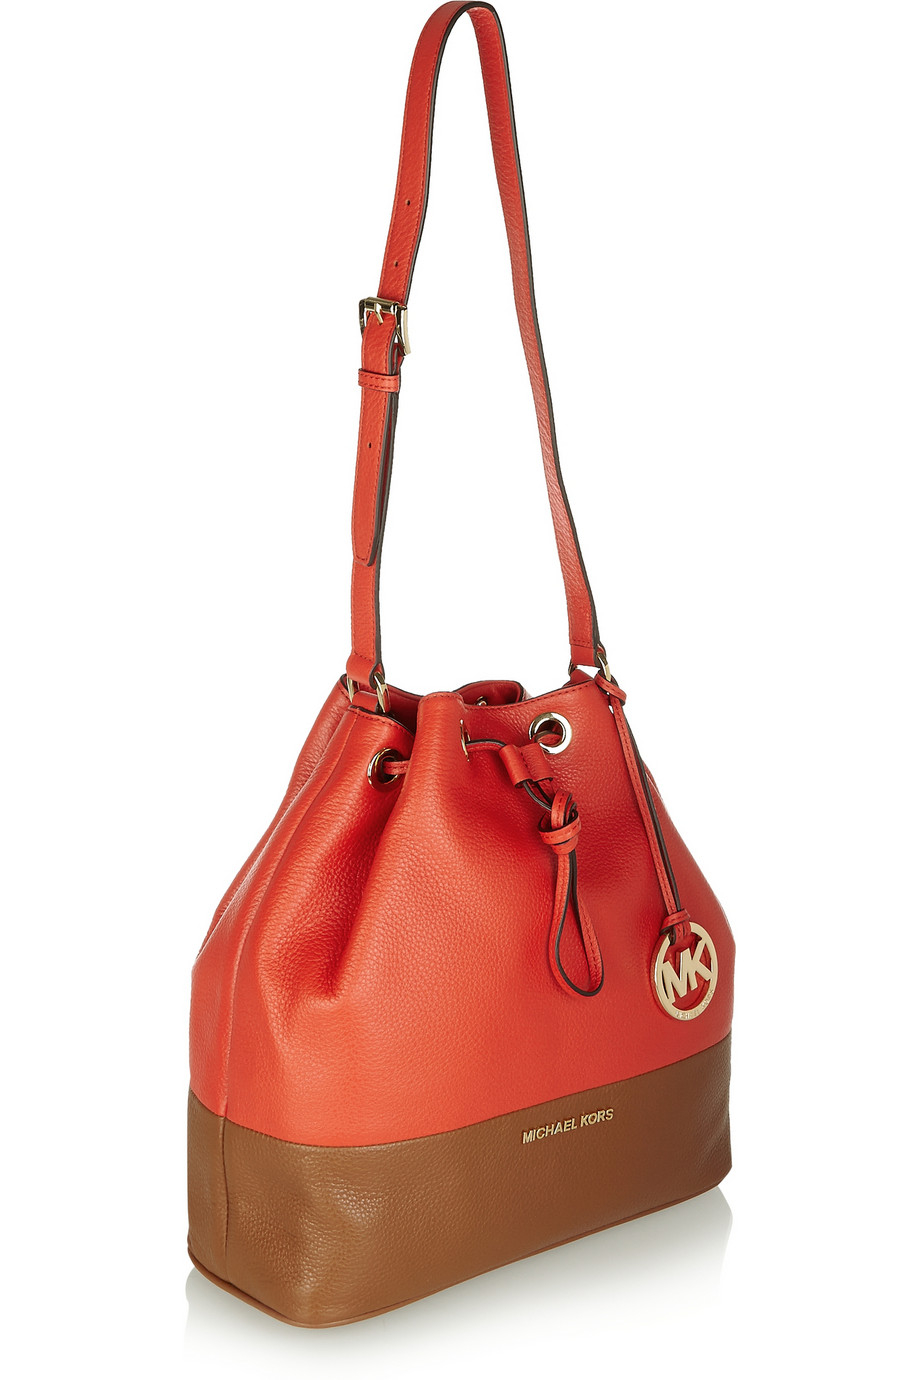 MICHAEL Michael Kors Jules Two-Tone Leather Bucket Bag in Orange - Lyst